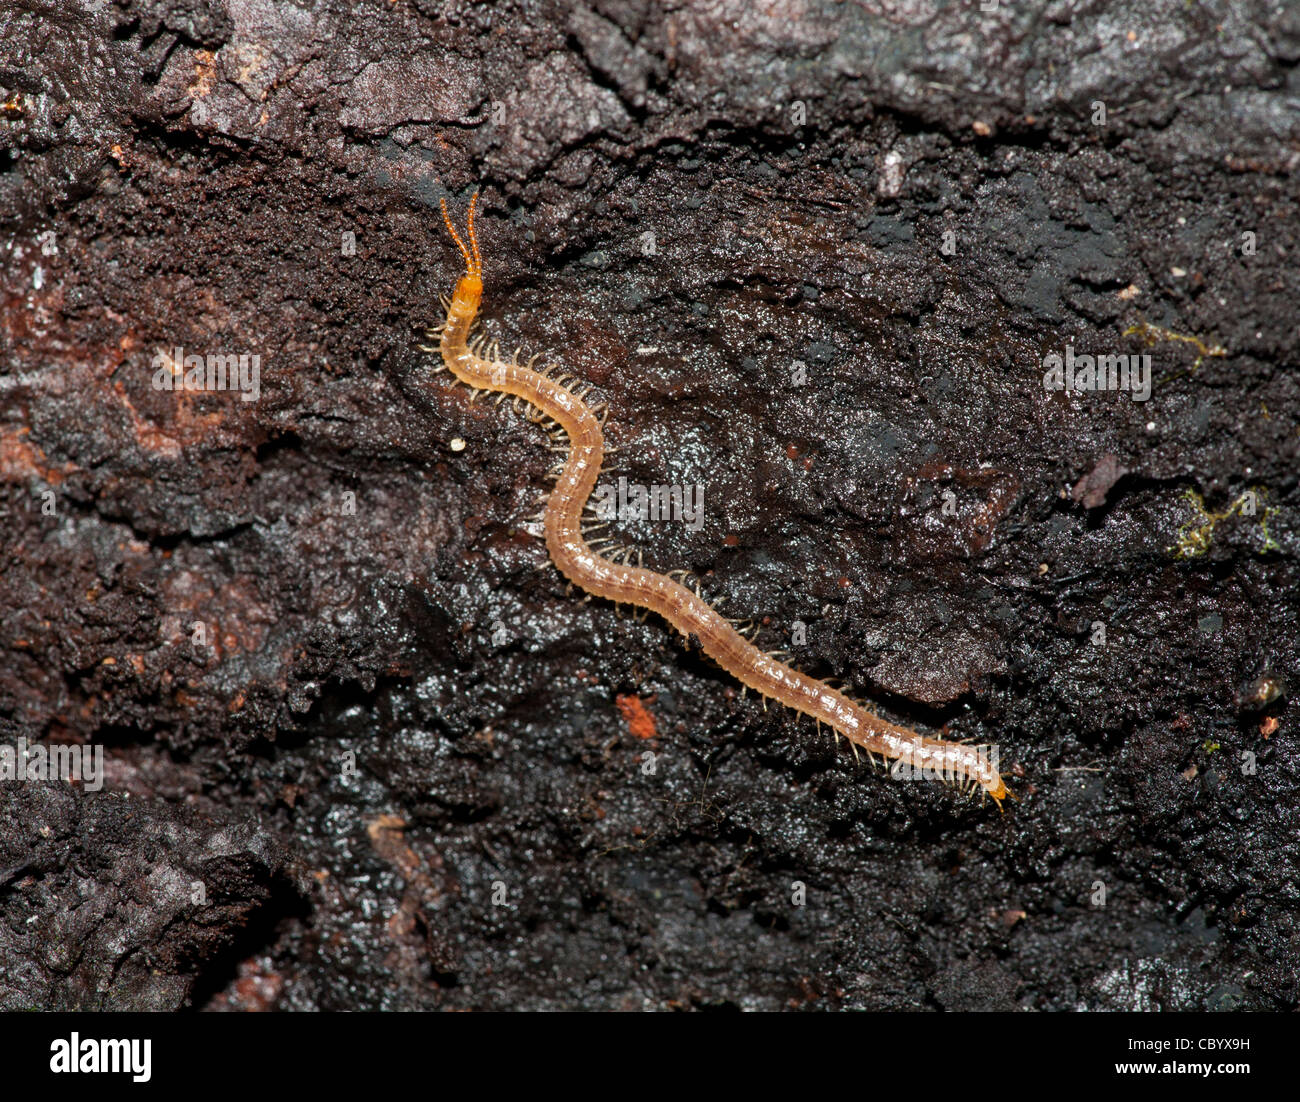 Soil centipede on tree trunk. Stock Photo